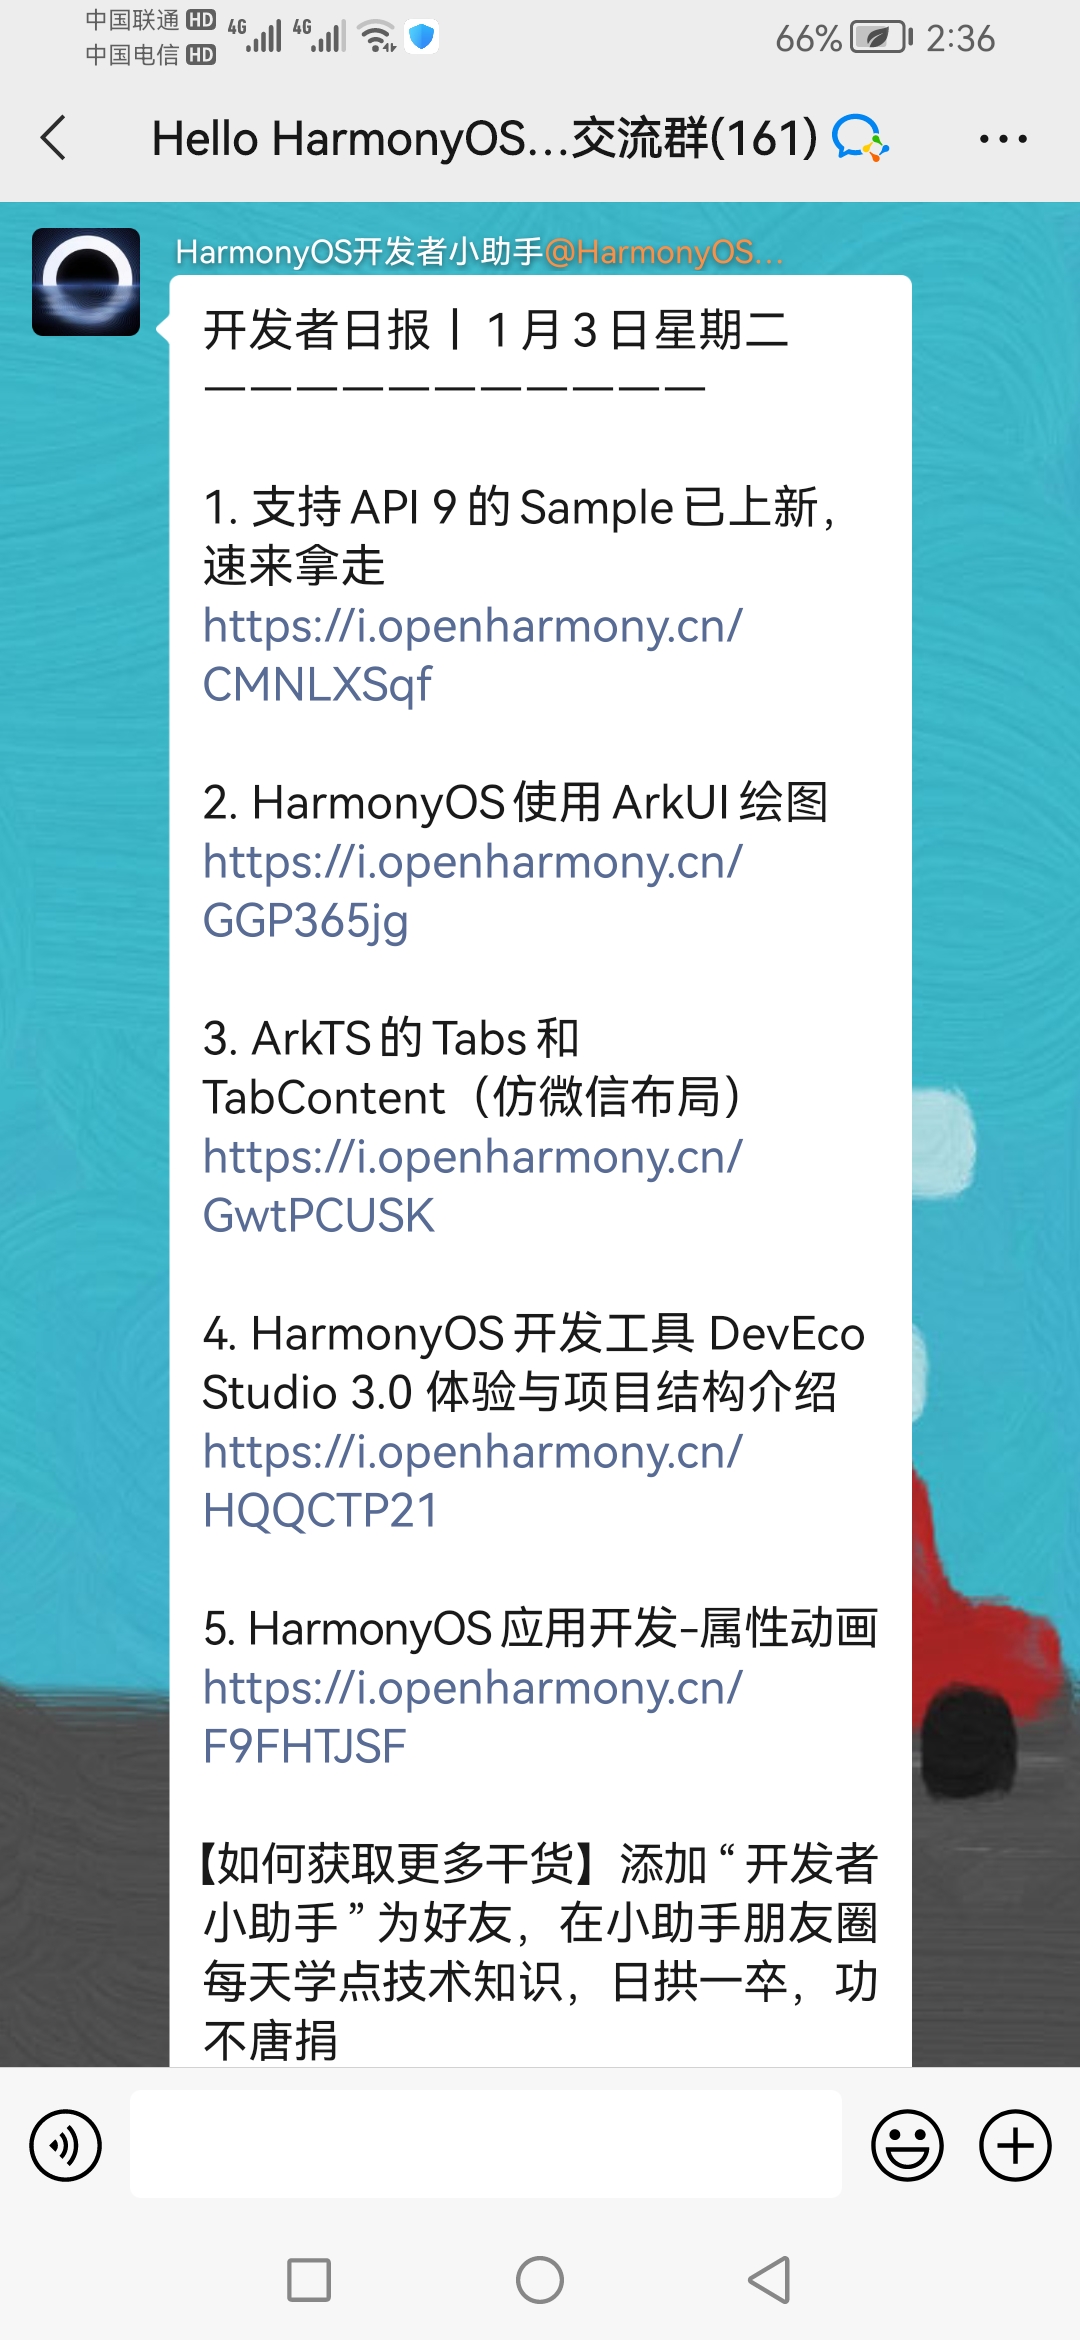 HCIA-HarmonyOS Application Developer学生党认证经验分享_Developer_11